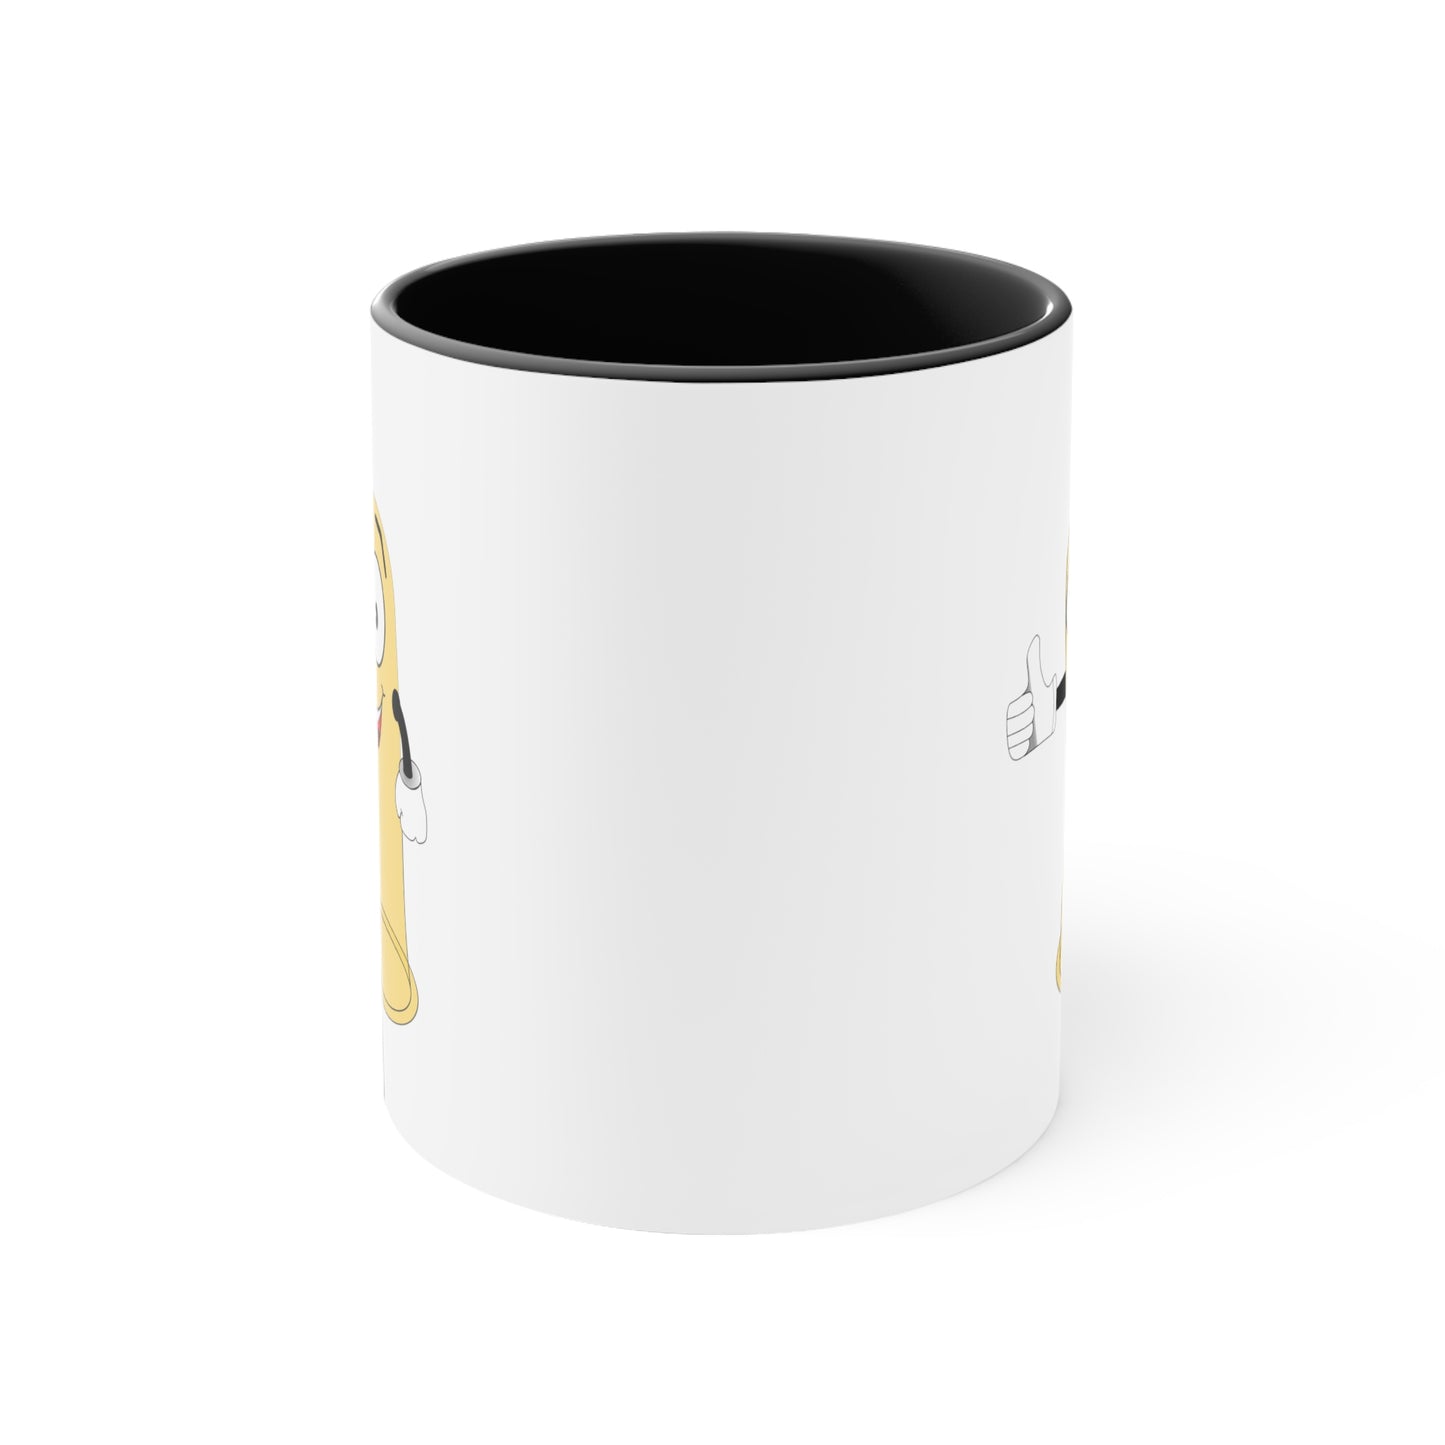 Condom Man Coffee Mug - Double Sided Black Accent White Ceramic 11oz by TheGlassyLass